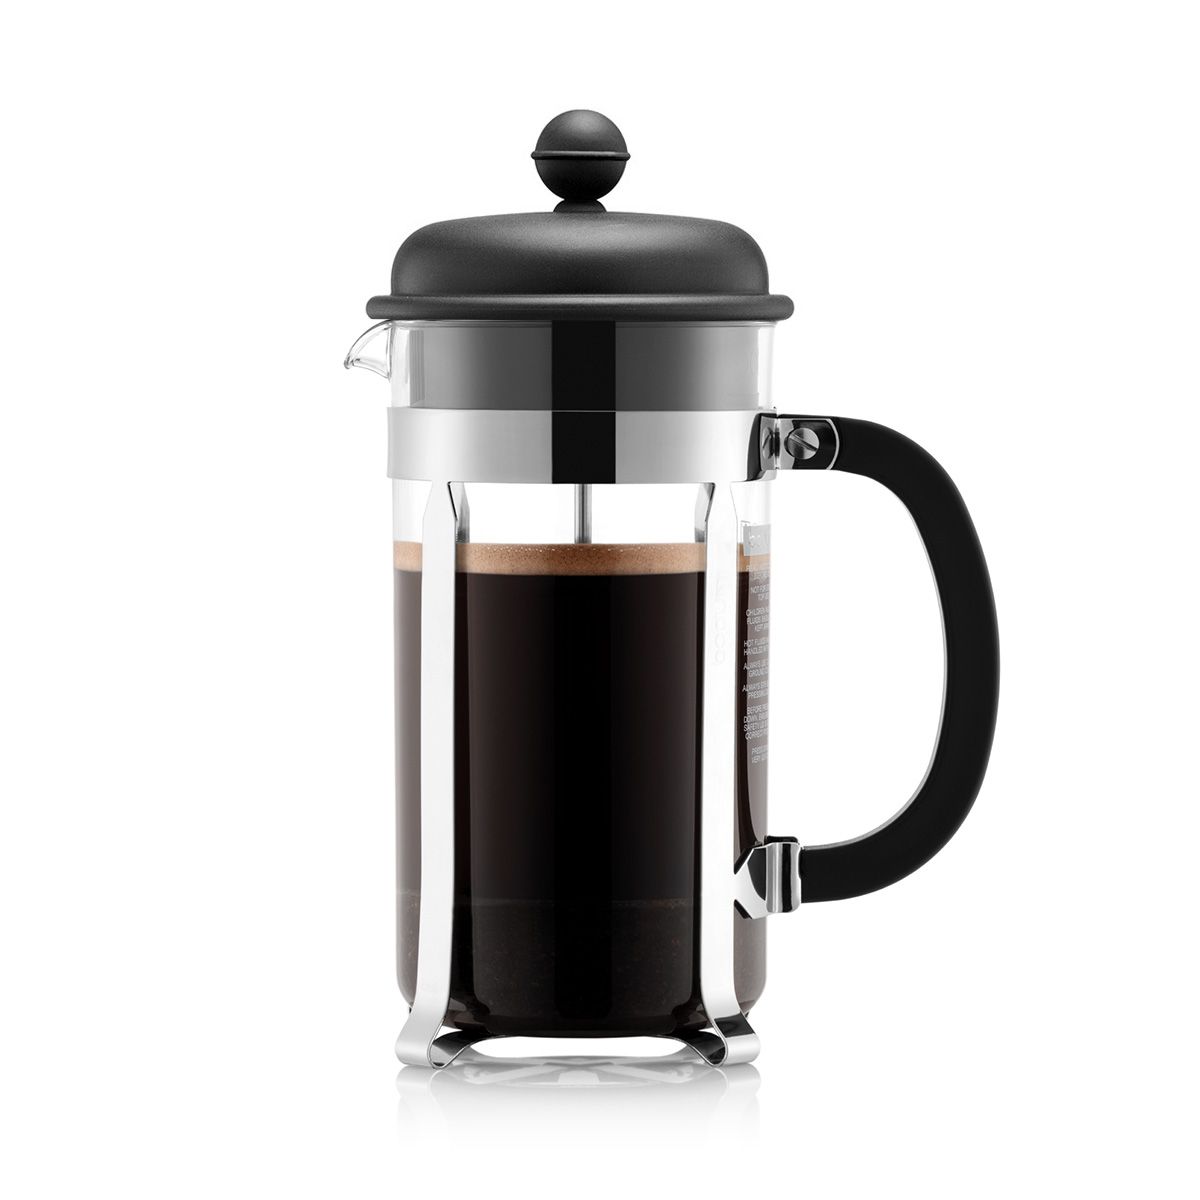 Bodum caffettiera kaffemaskine sort, 8 kopper